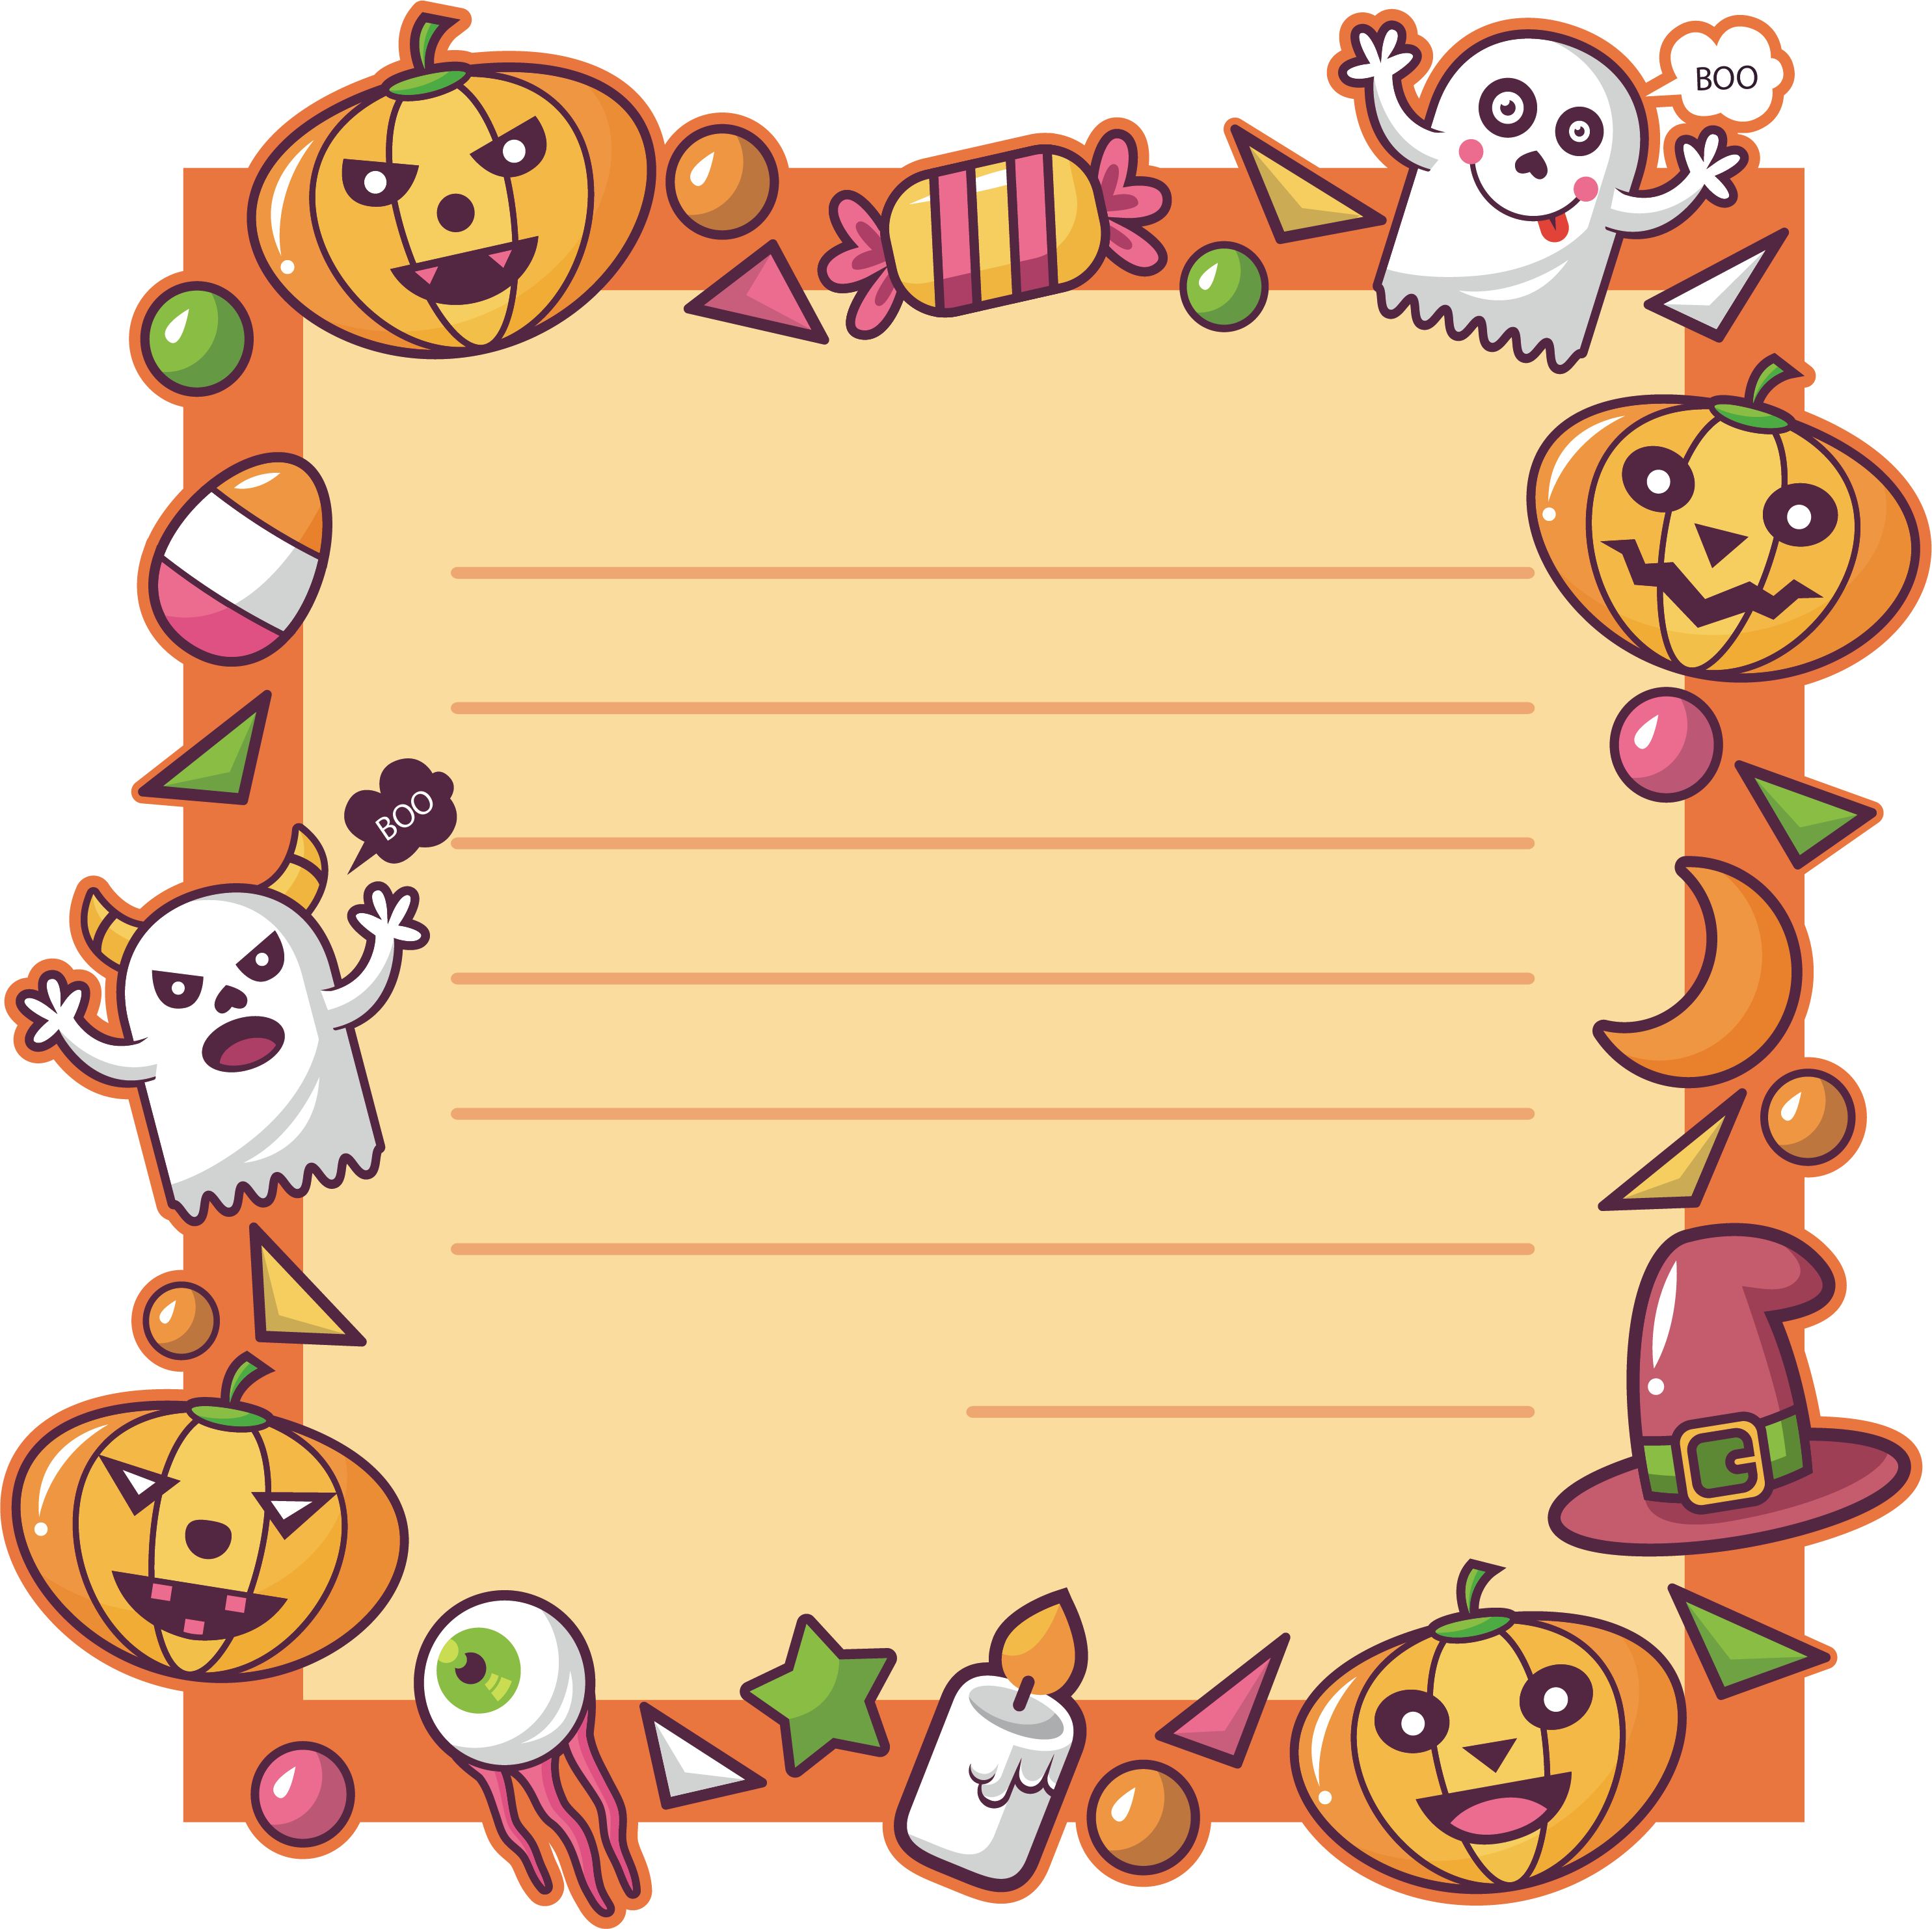 A Cartoon Halloween Frame With Pumpkins And Candy